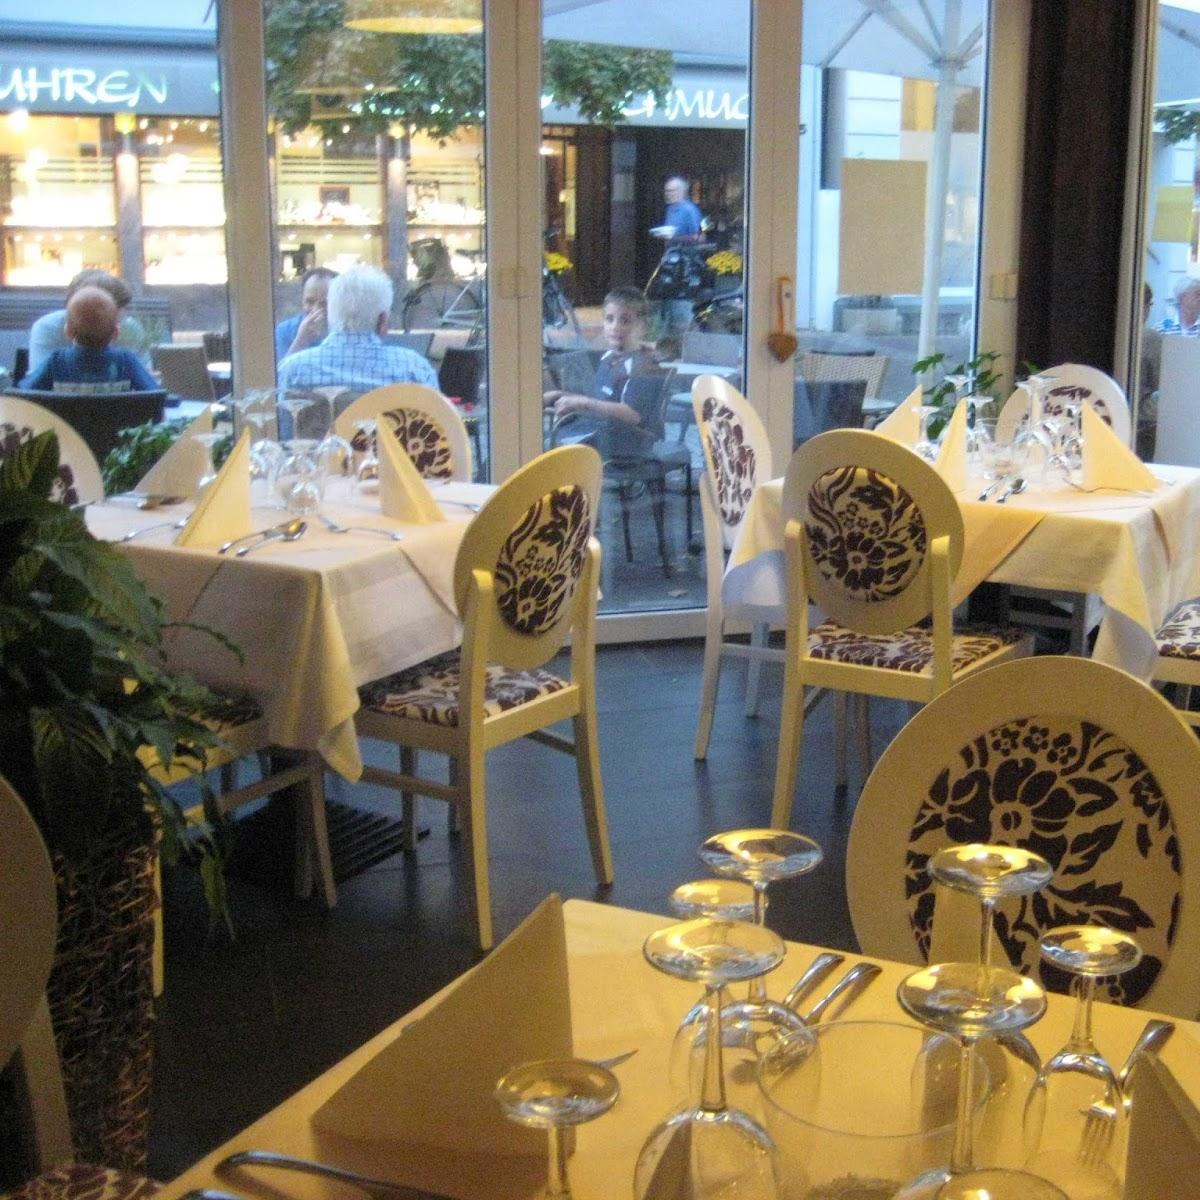 Restaurant "Ristorante Italo" in  Stadthagen